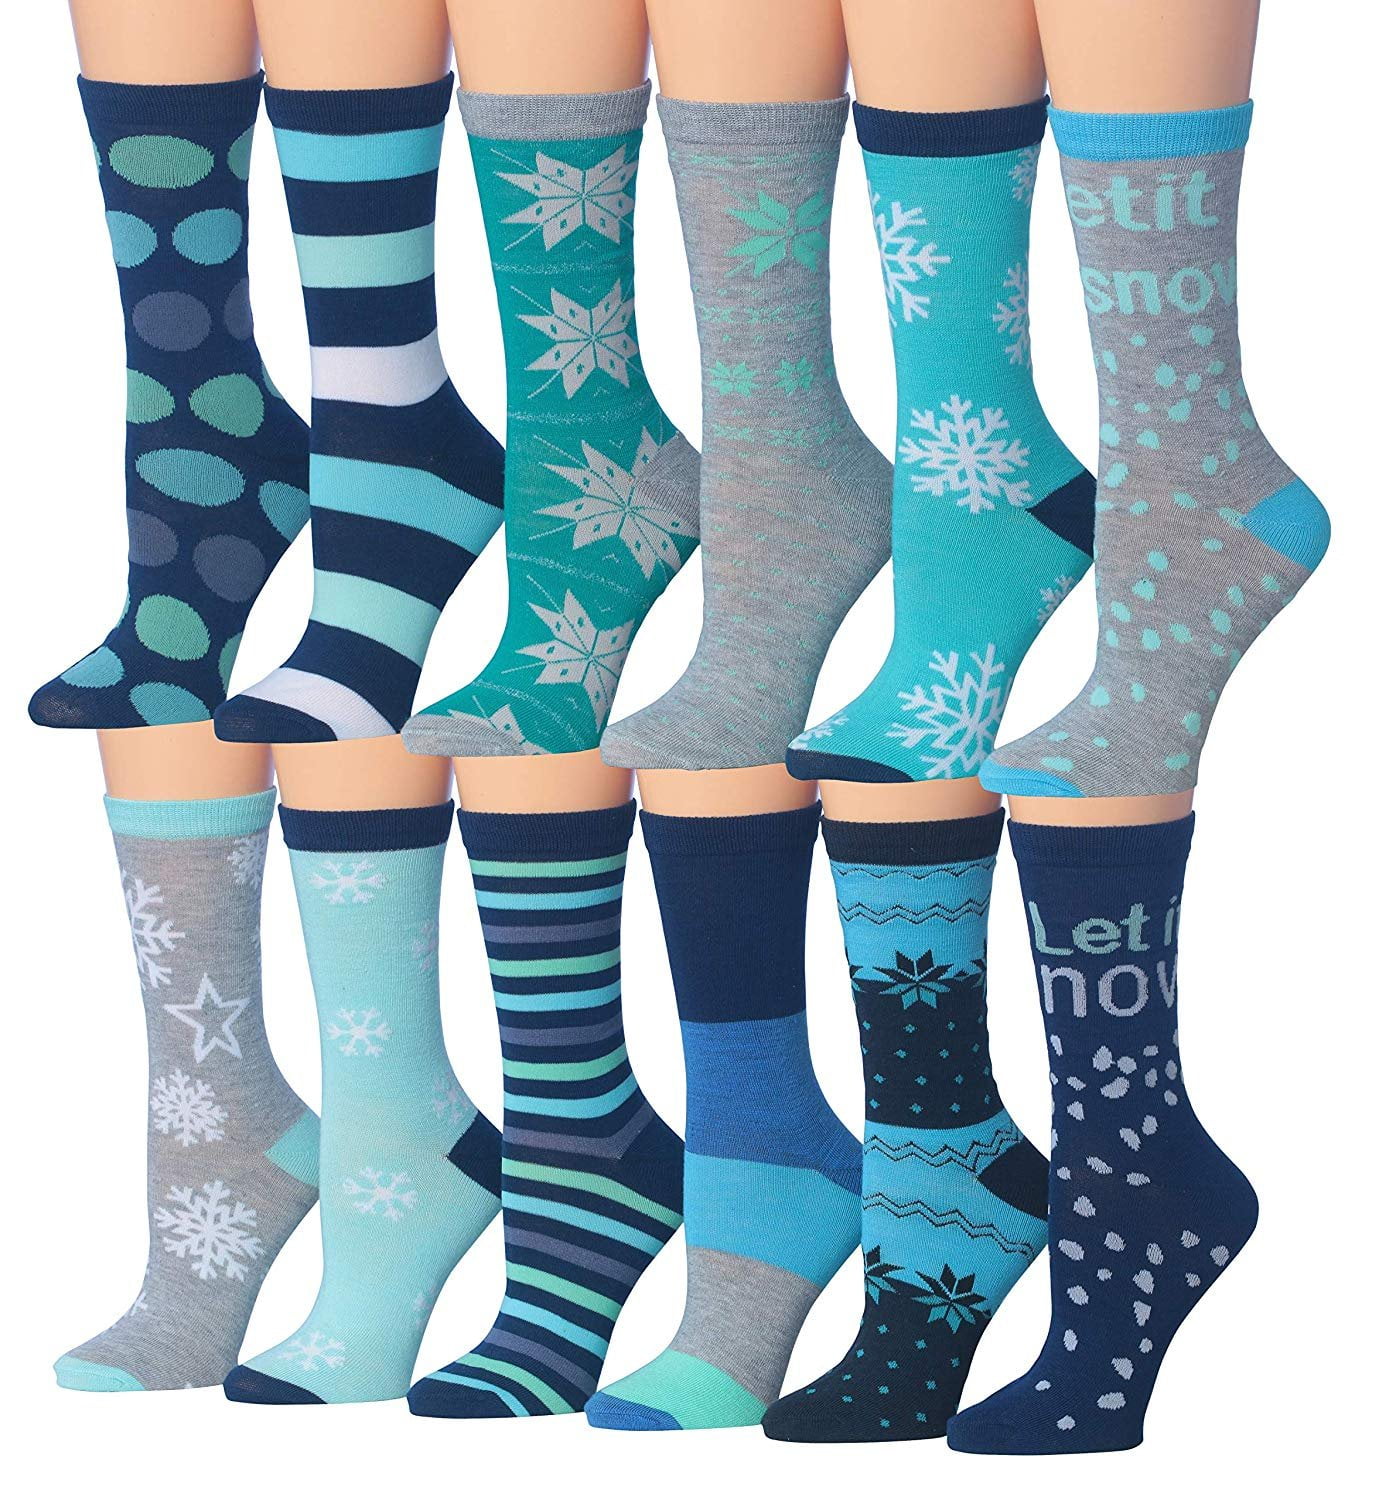 Tipi Toe - Tipi Toe Women's 12 Pairs Colorful Patterned Crew Socks ...